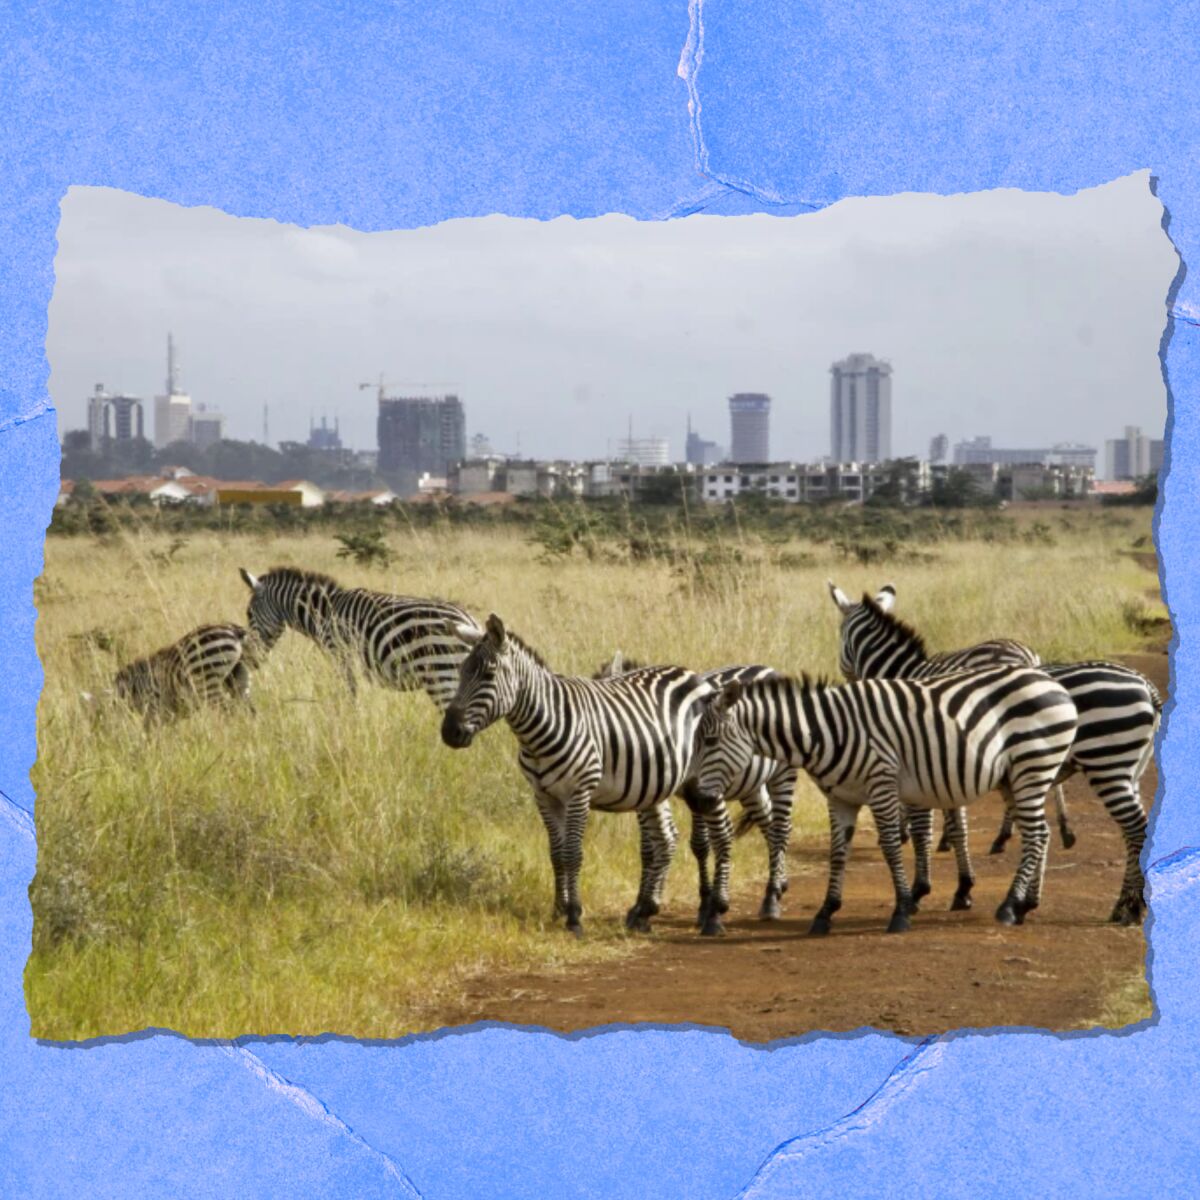 Zebras roam six miles from downtown Nairobi.